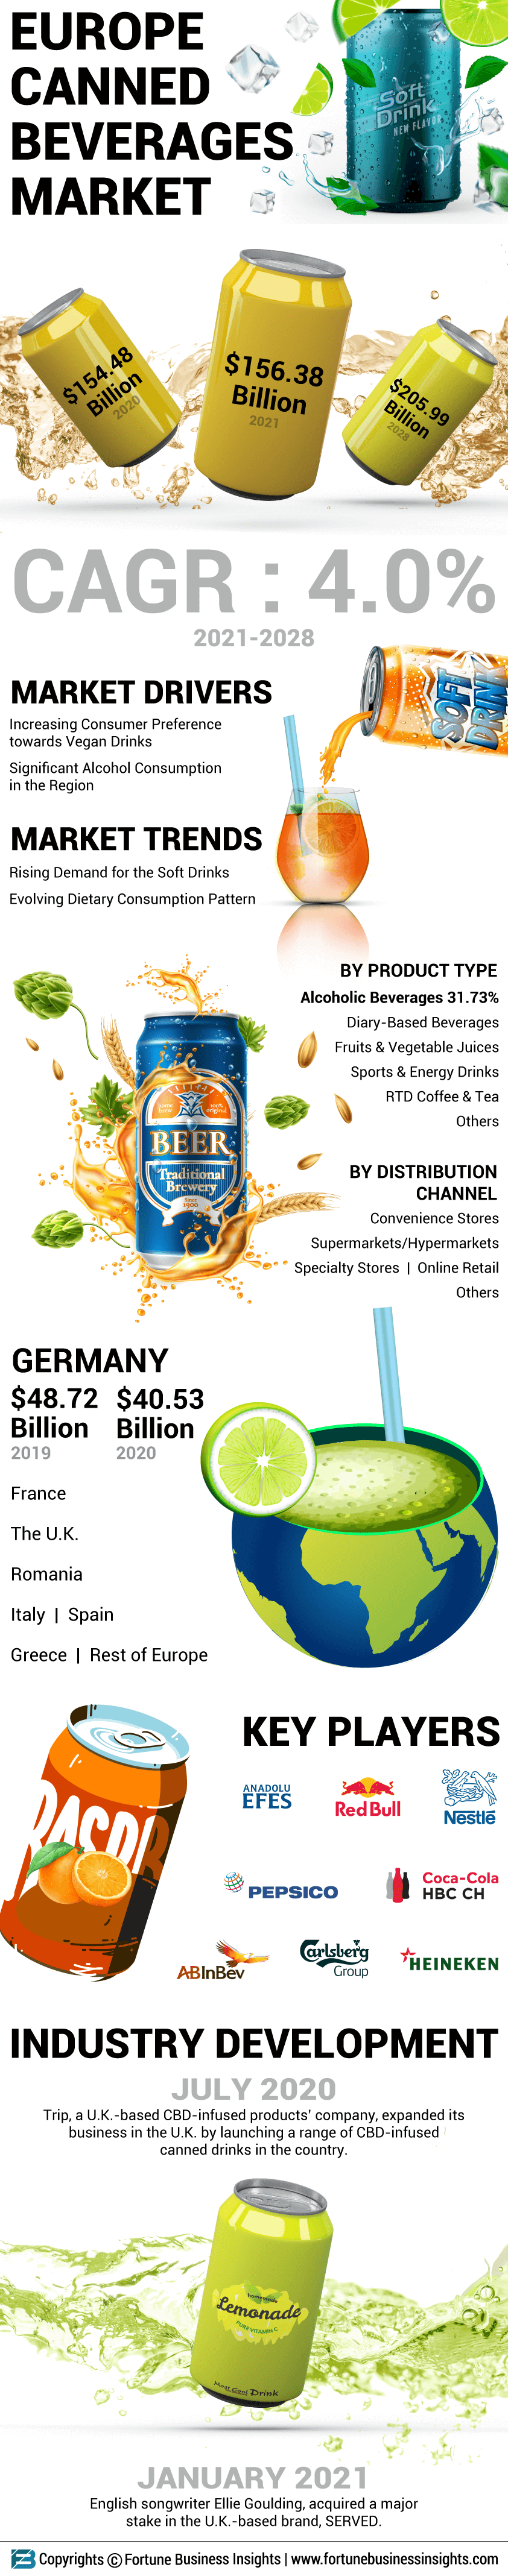 Europe Canned Beverages Market